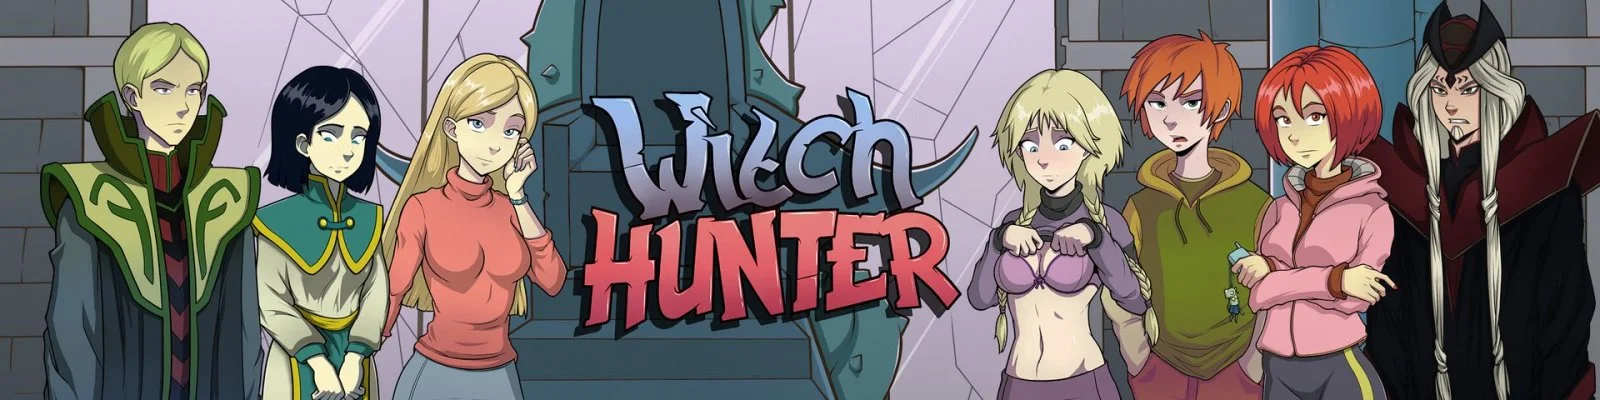 Witch Hunter [v0.7] main image